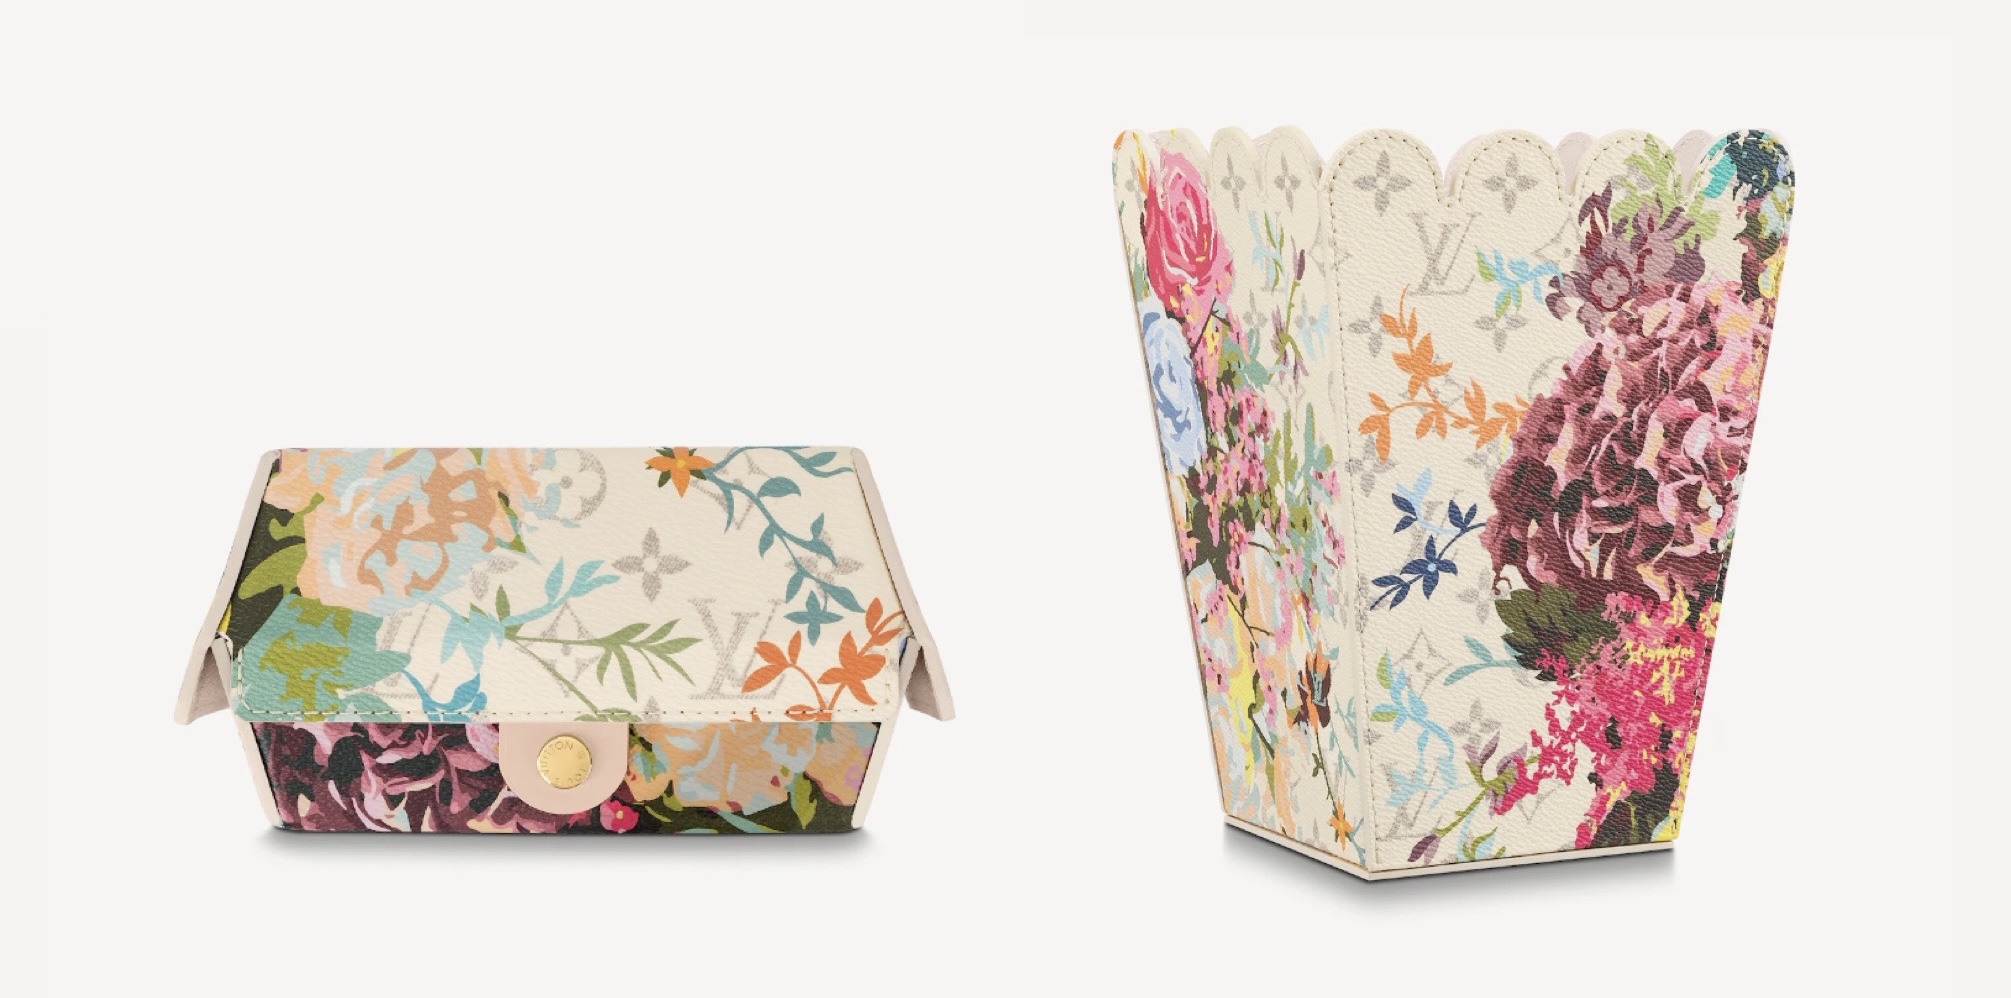 Louis Vuitton Fall-Winter 2022 final collection Virgil Abloh “This Is Not Monogram” theme LV Flower burger box popcorn basket paint can bag